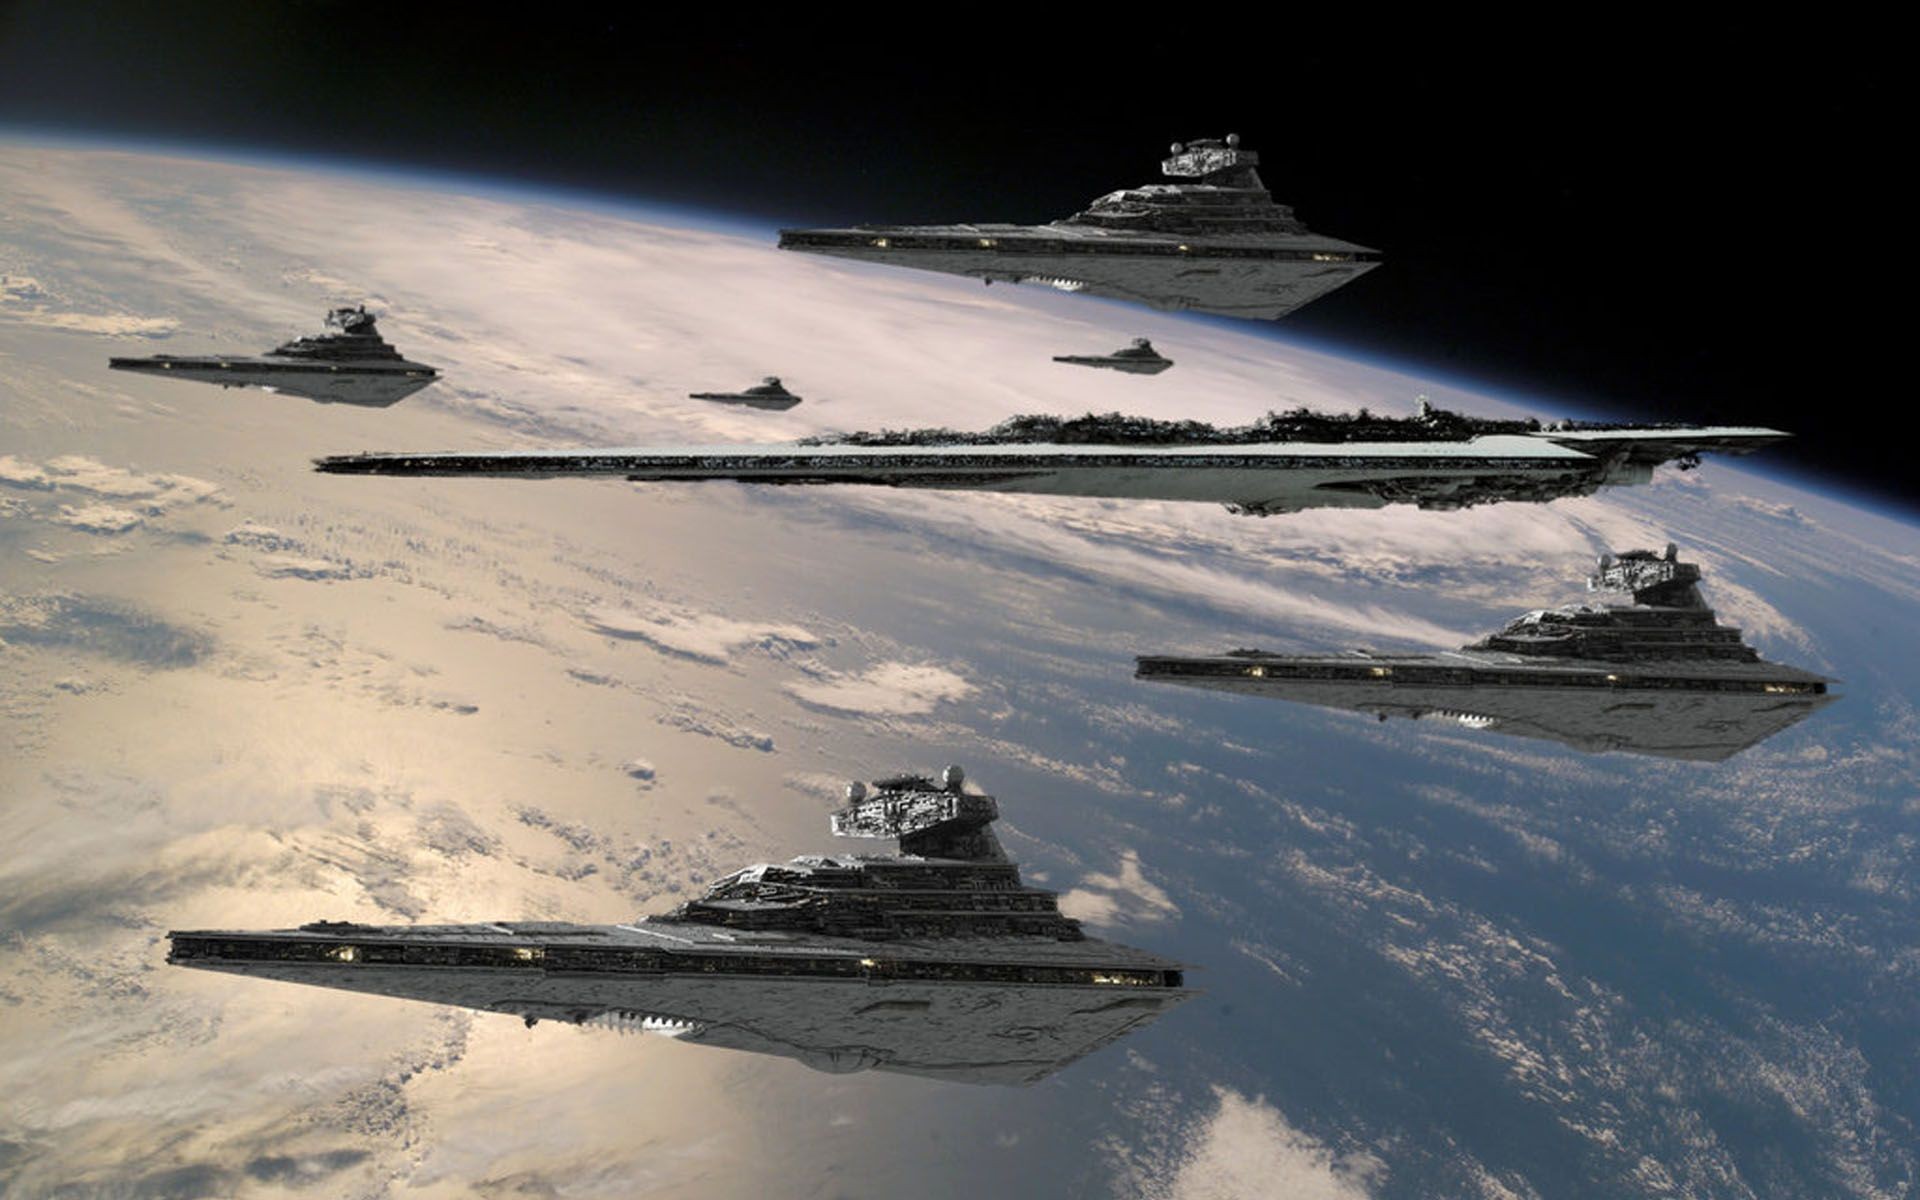 star wars space wallpaper,vehicle,warship,ship,watercraft,amphibious assault ship